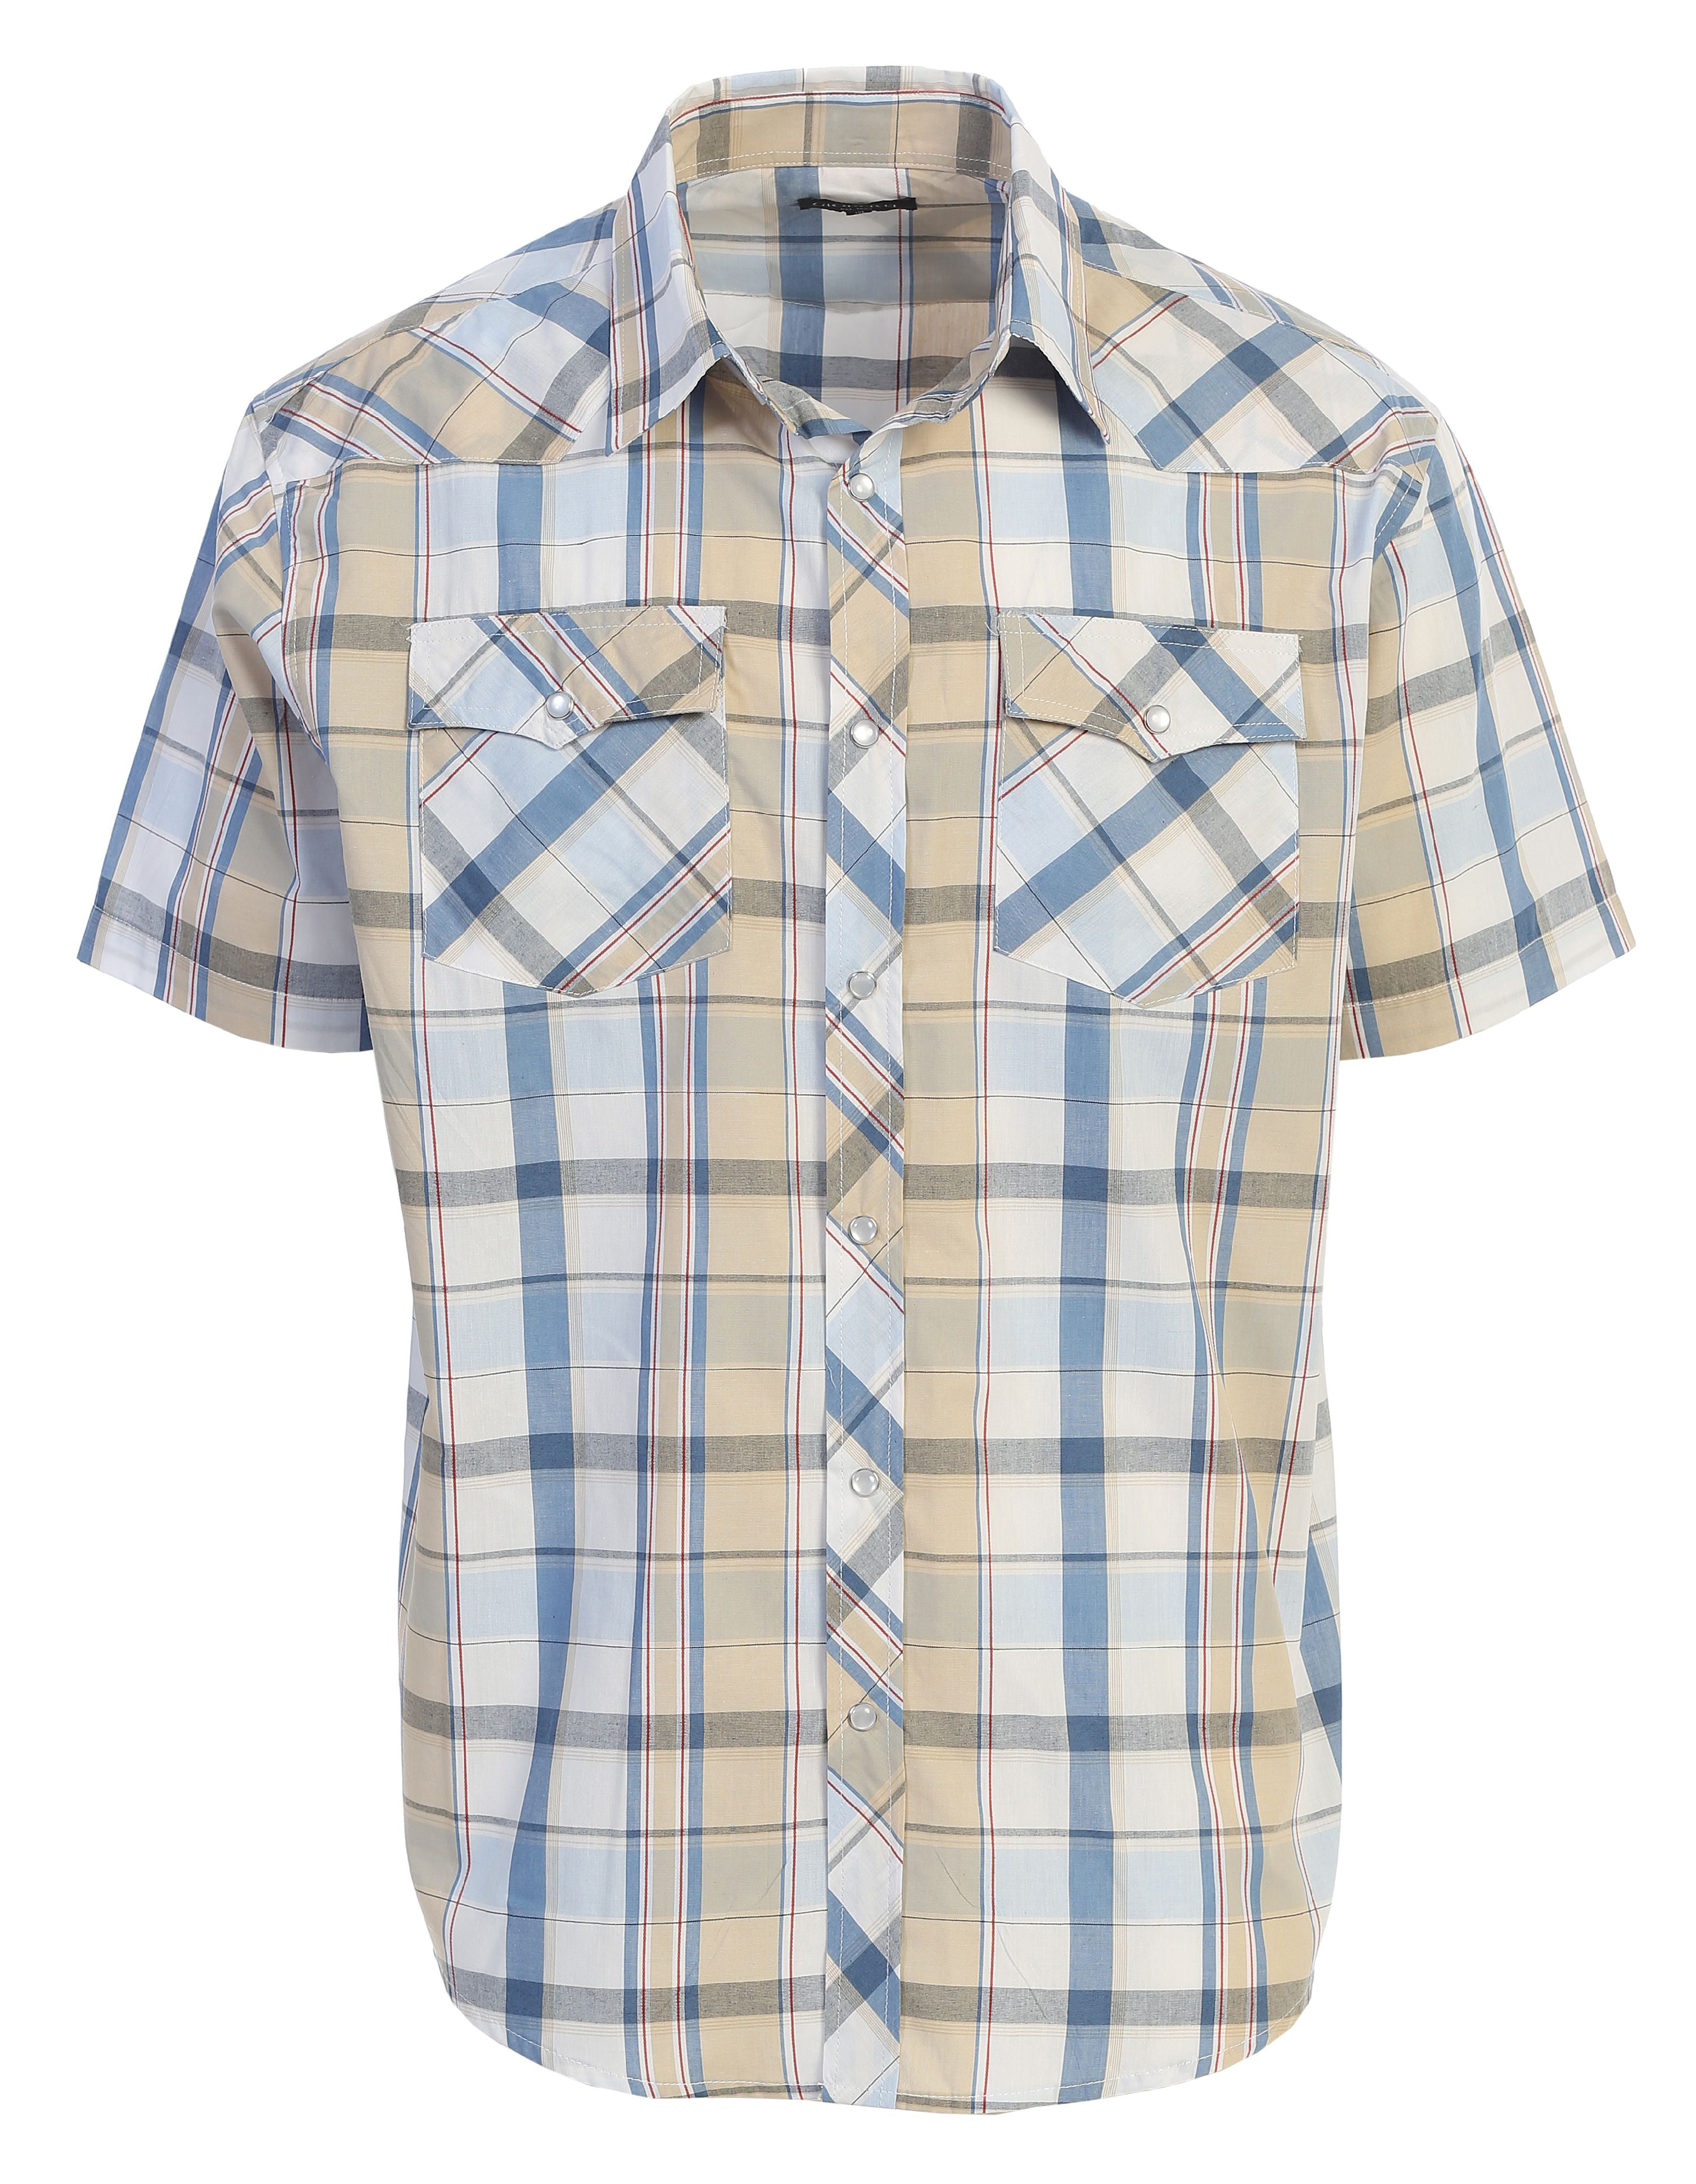 Gioberti - Gioberti Men's Short Sleeve Plaid Western Shirt W/Pearl Snap ...